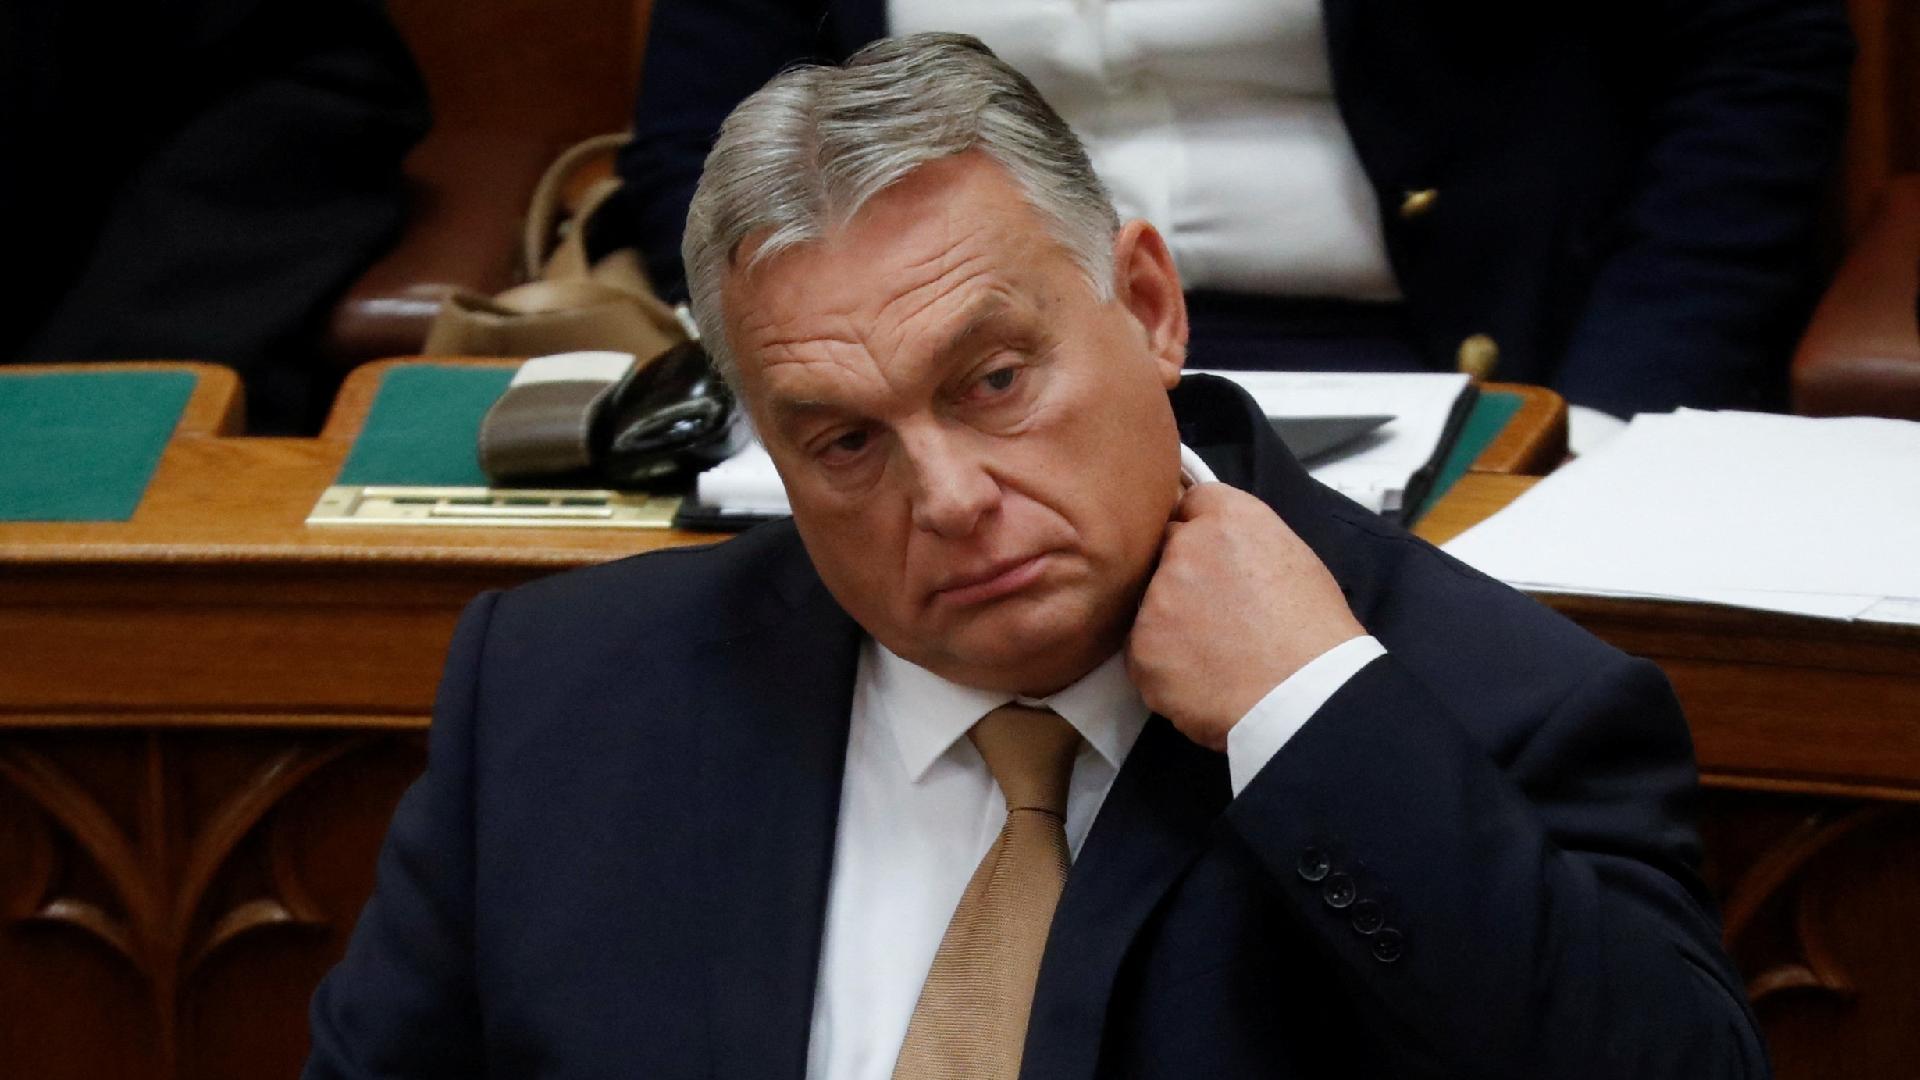 Hungary will turn to international partners if EU blocks funds